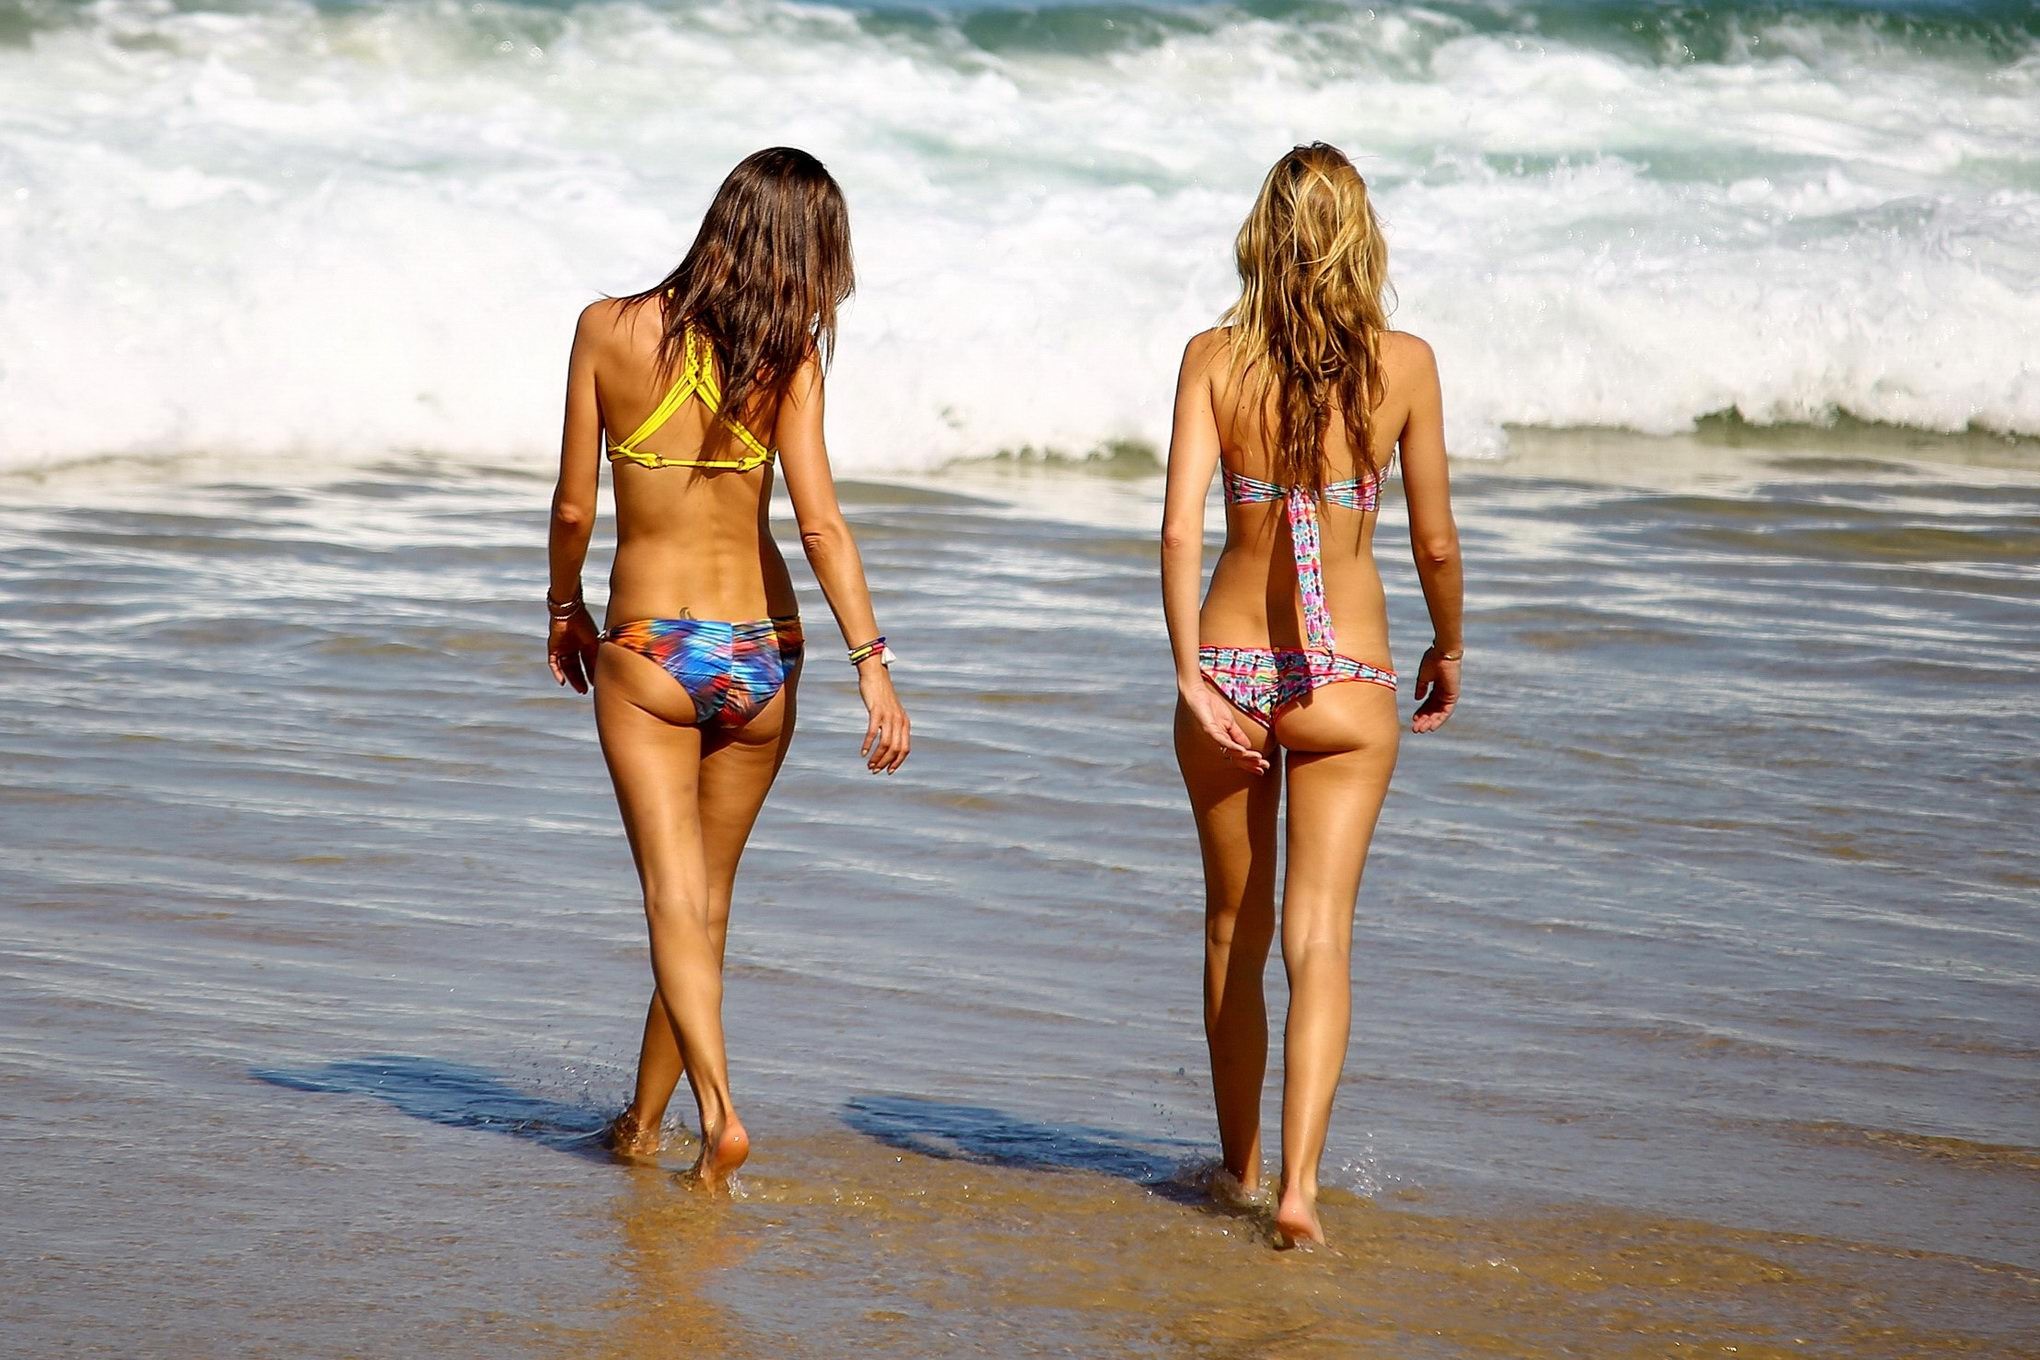 Alessandra Ambrosio showing off her bikini body on a beach